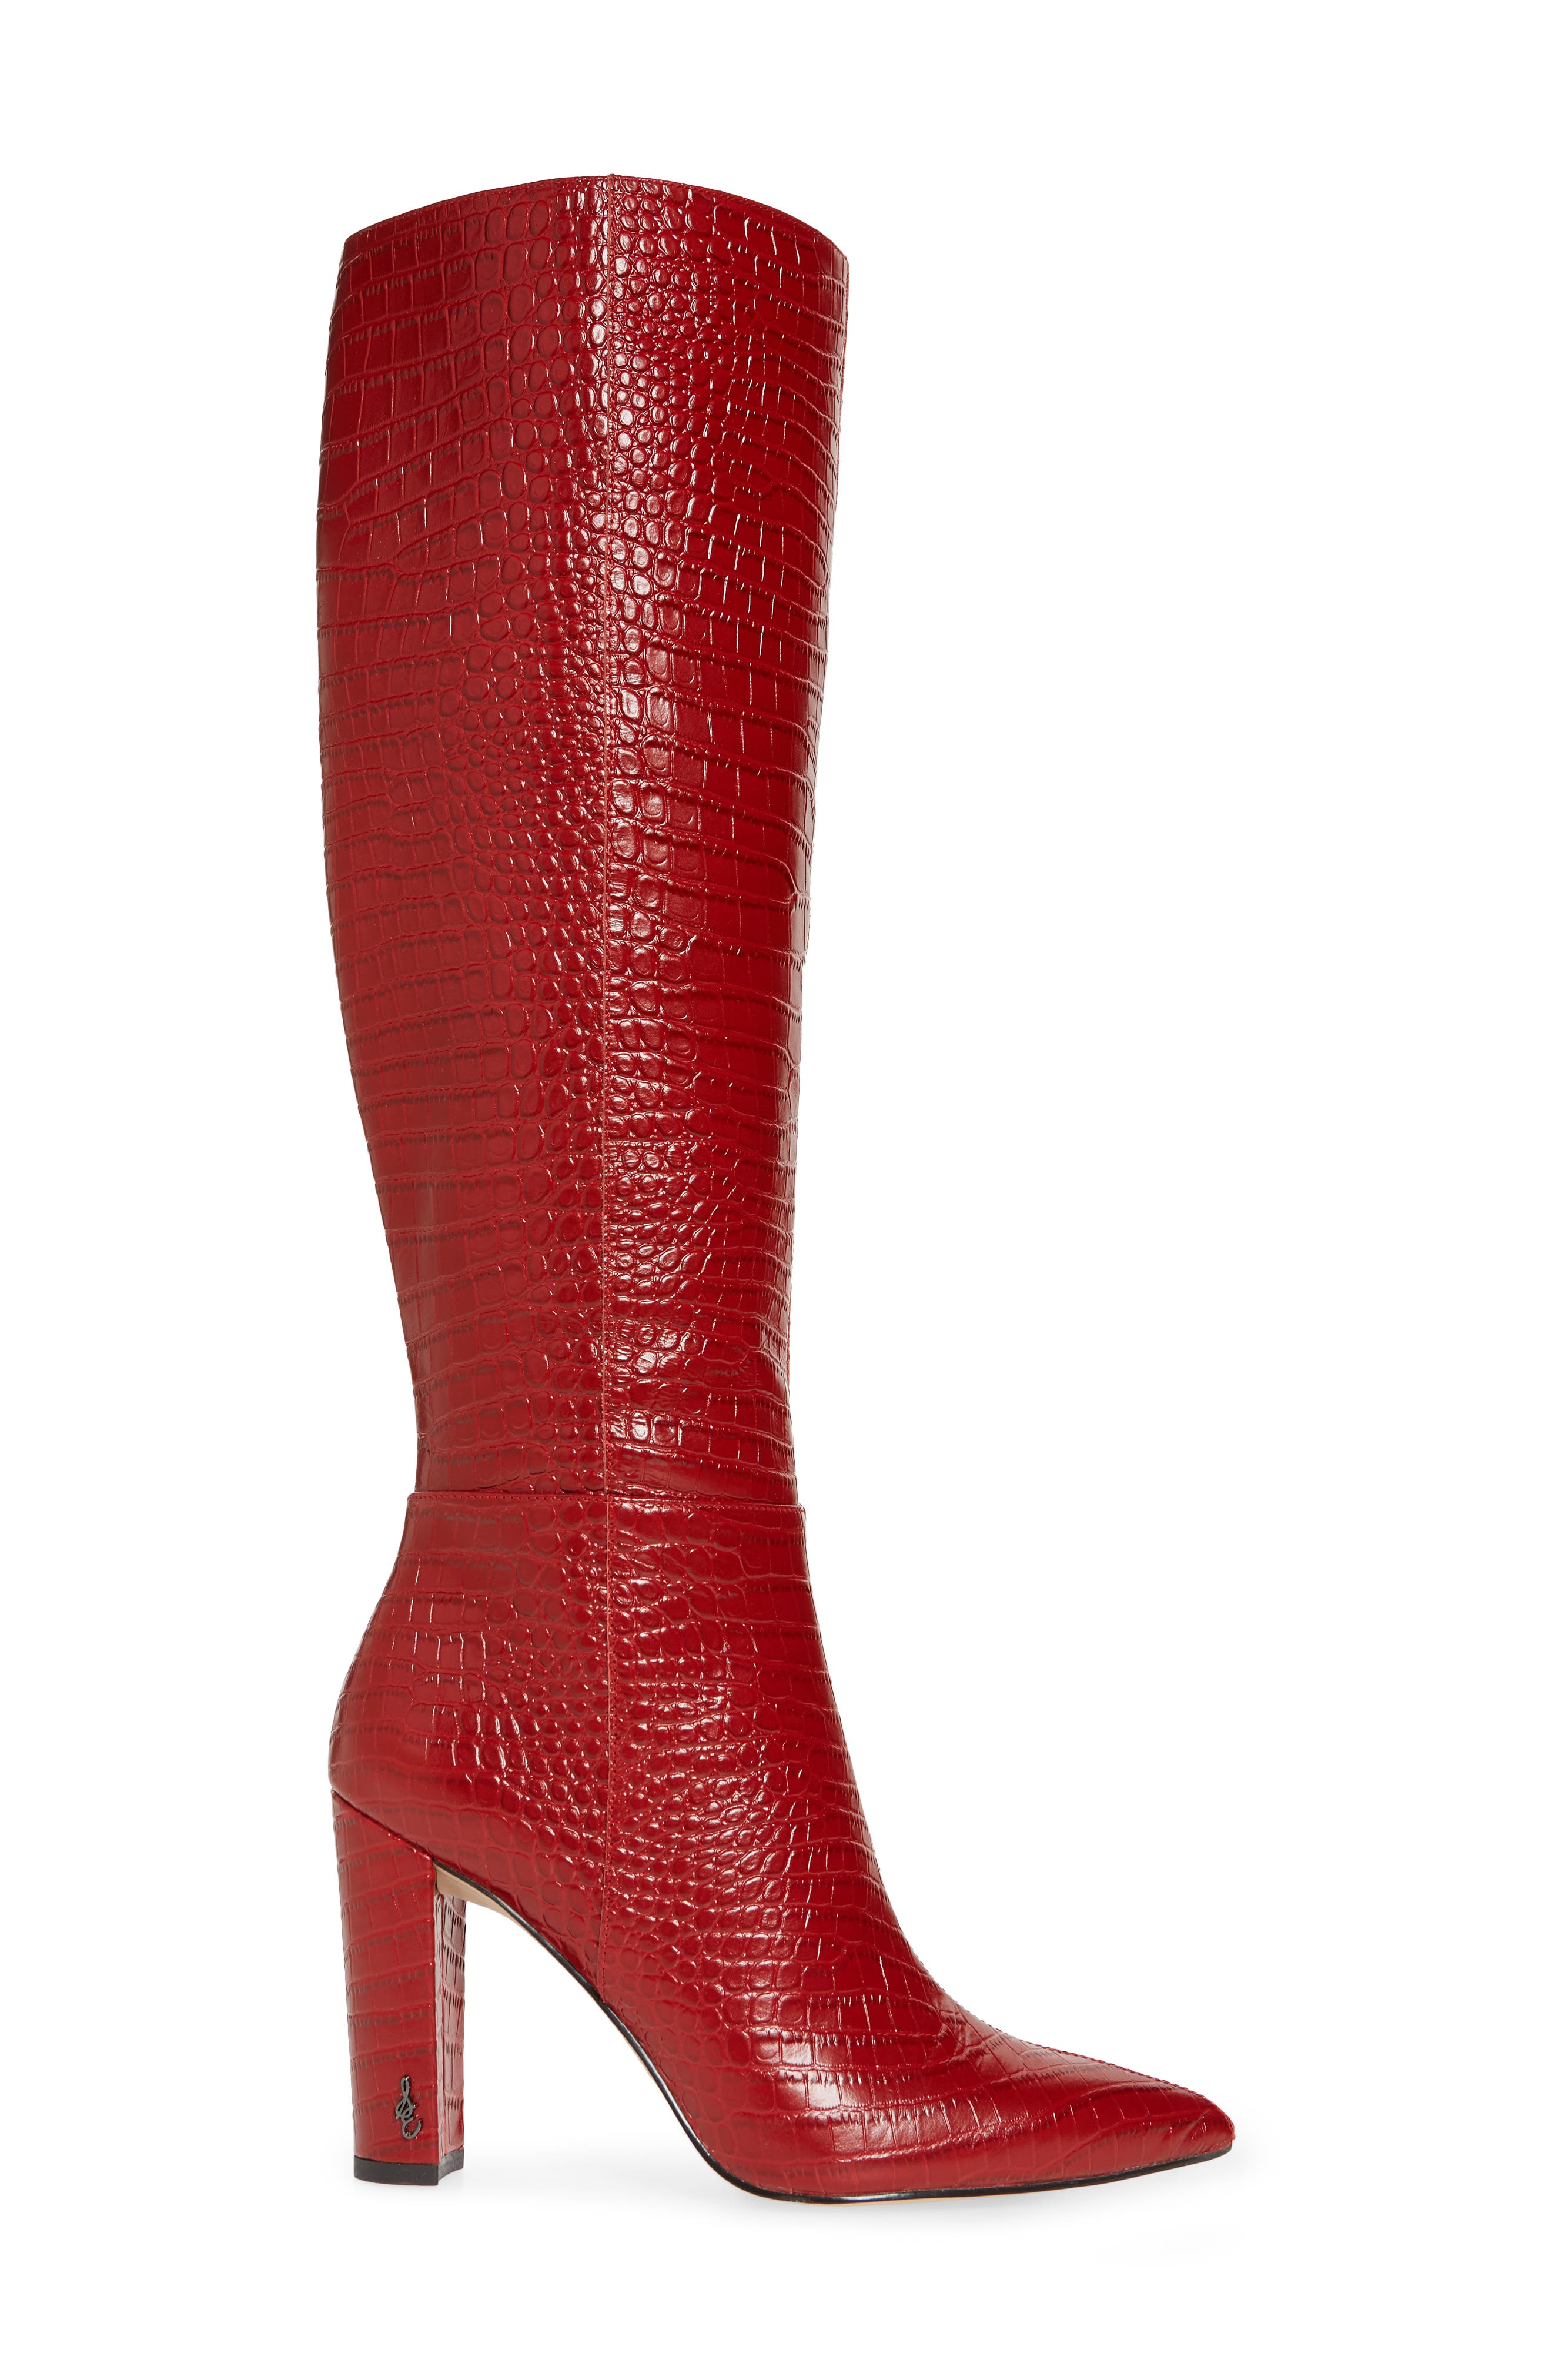 sam edelman red boots